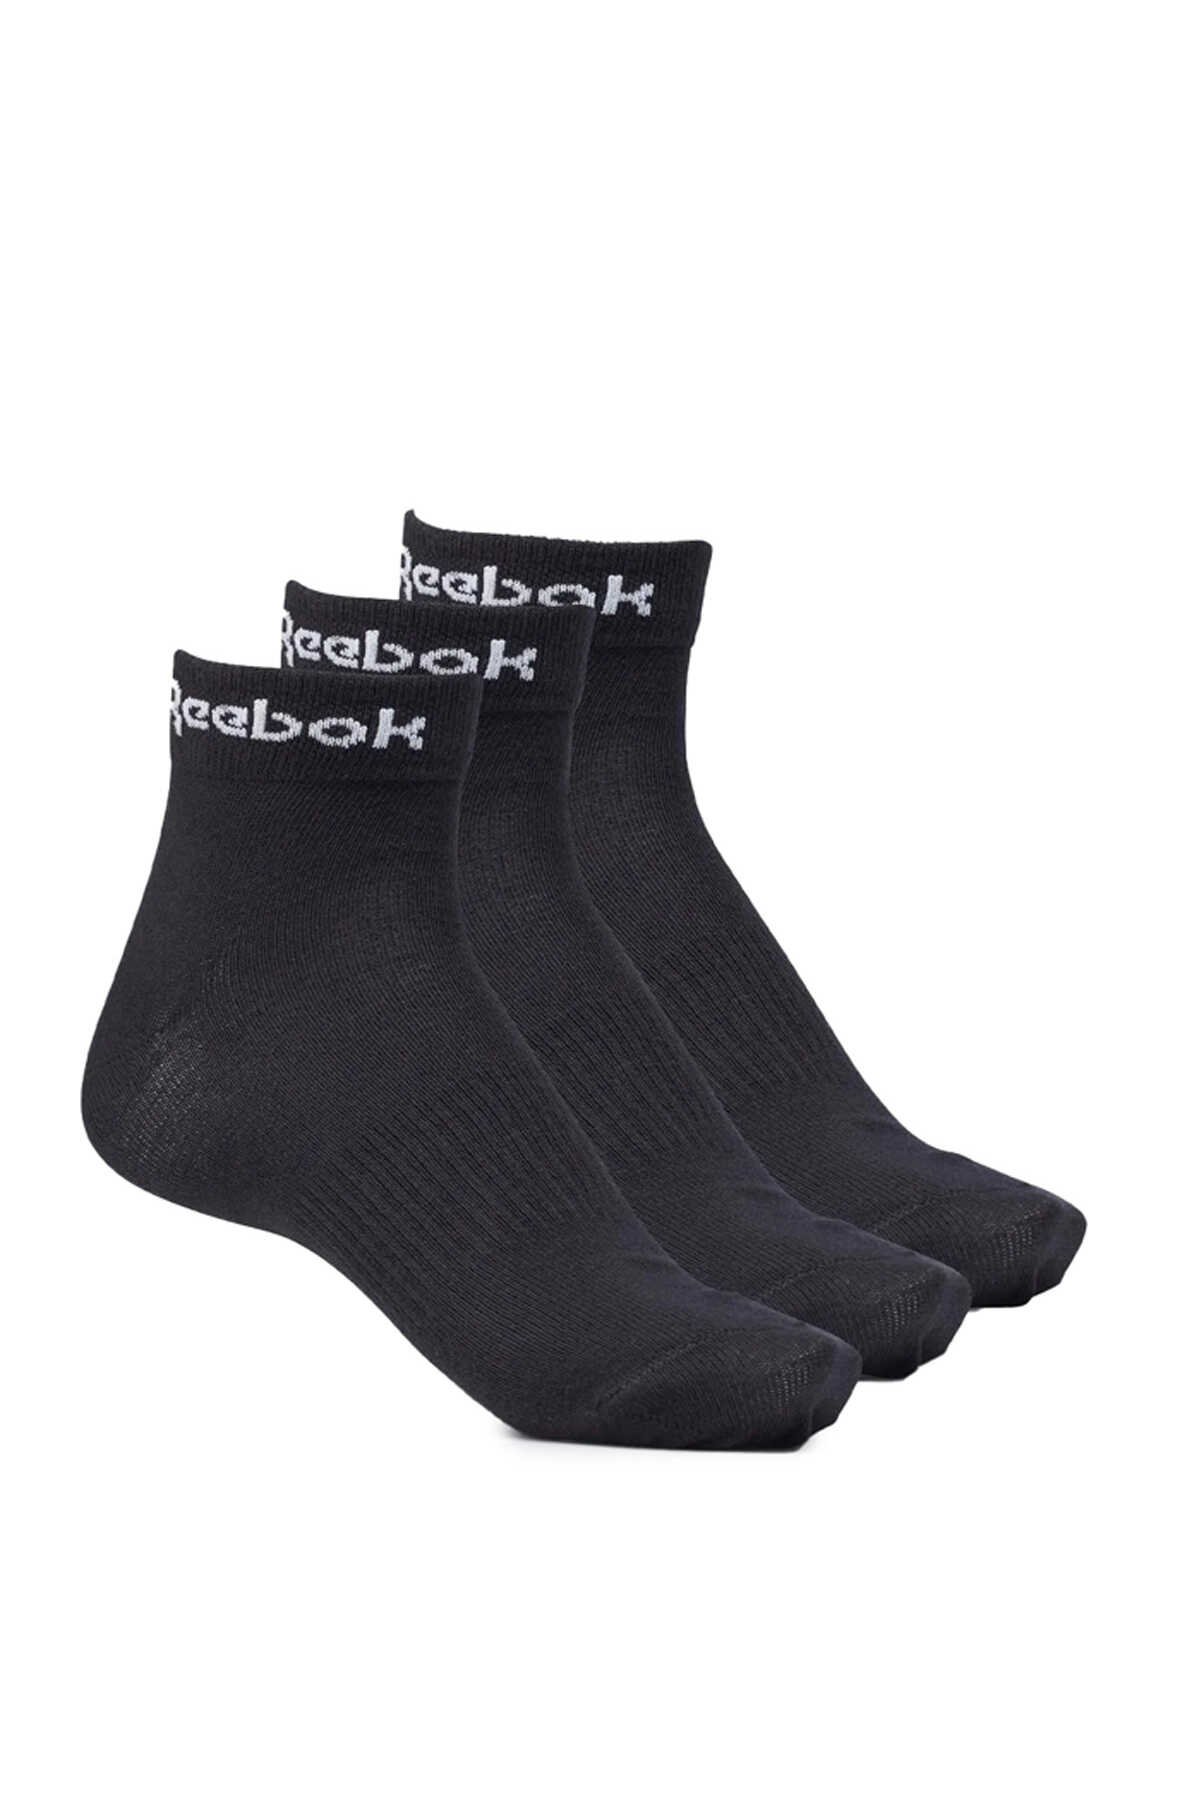 Reebok - Reebok CORE ANKLE SOCK Unisex Çorap Siyah_0